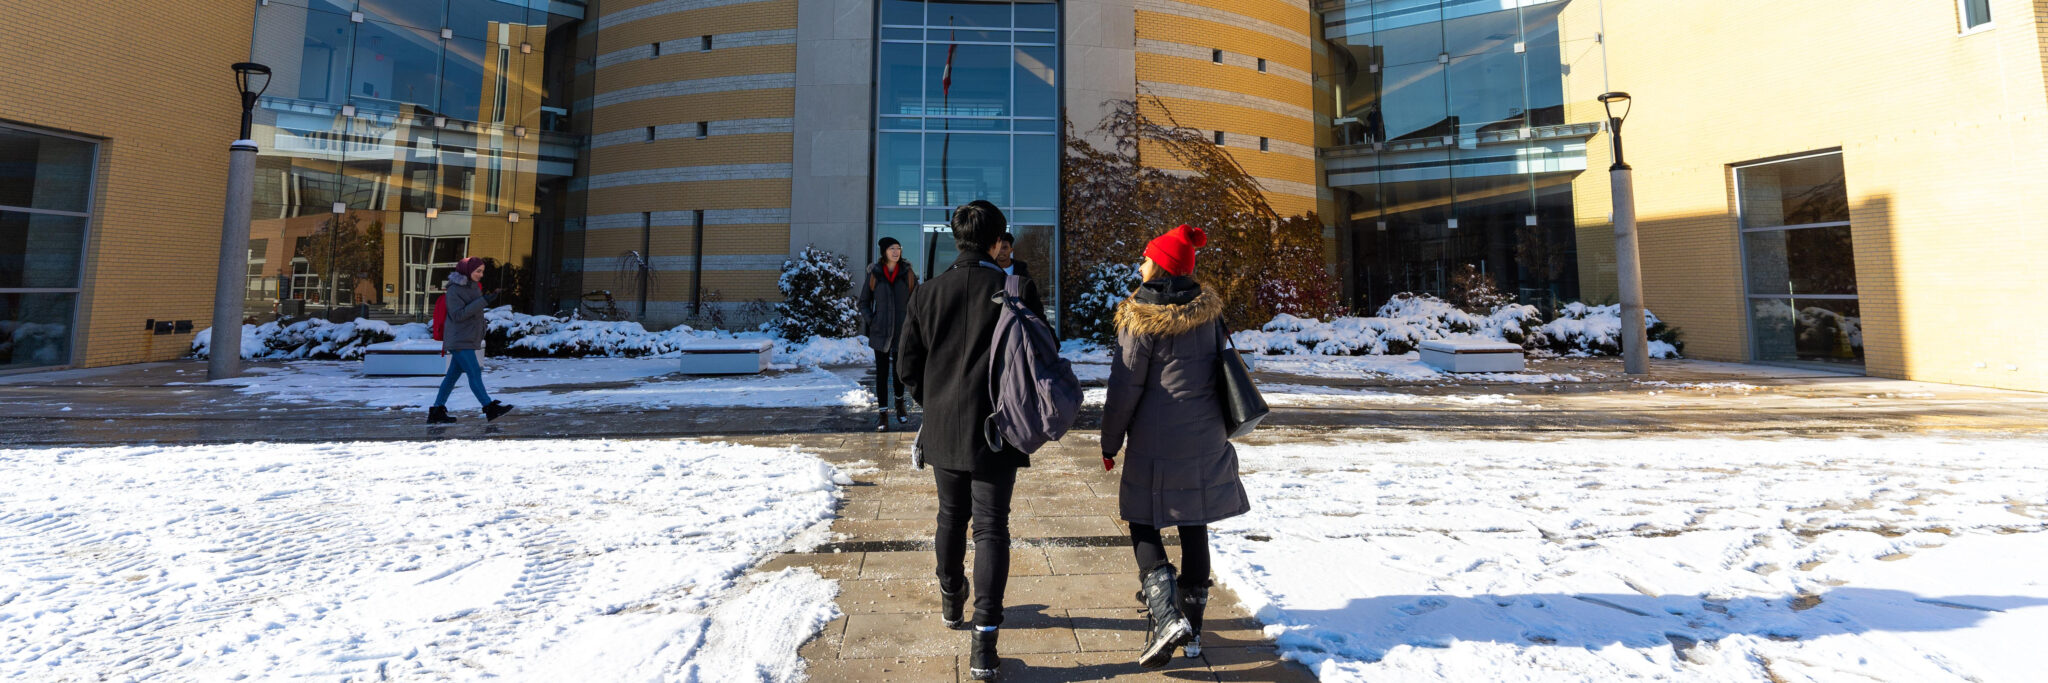 Students entering Vari Hall during winter